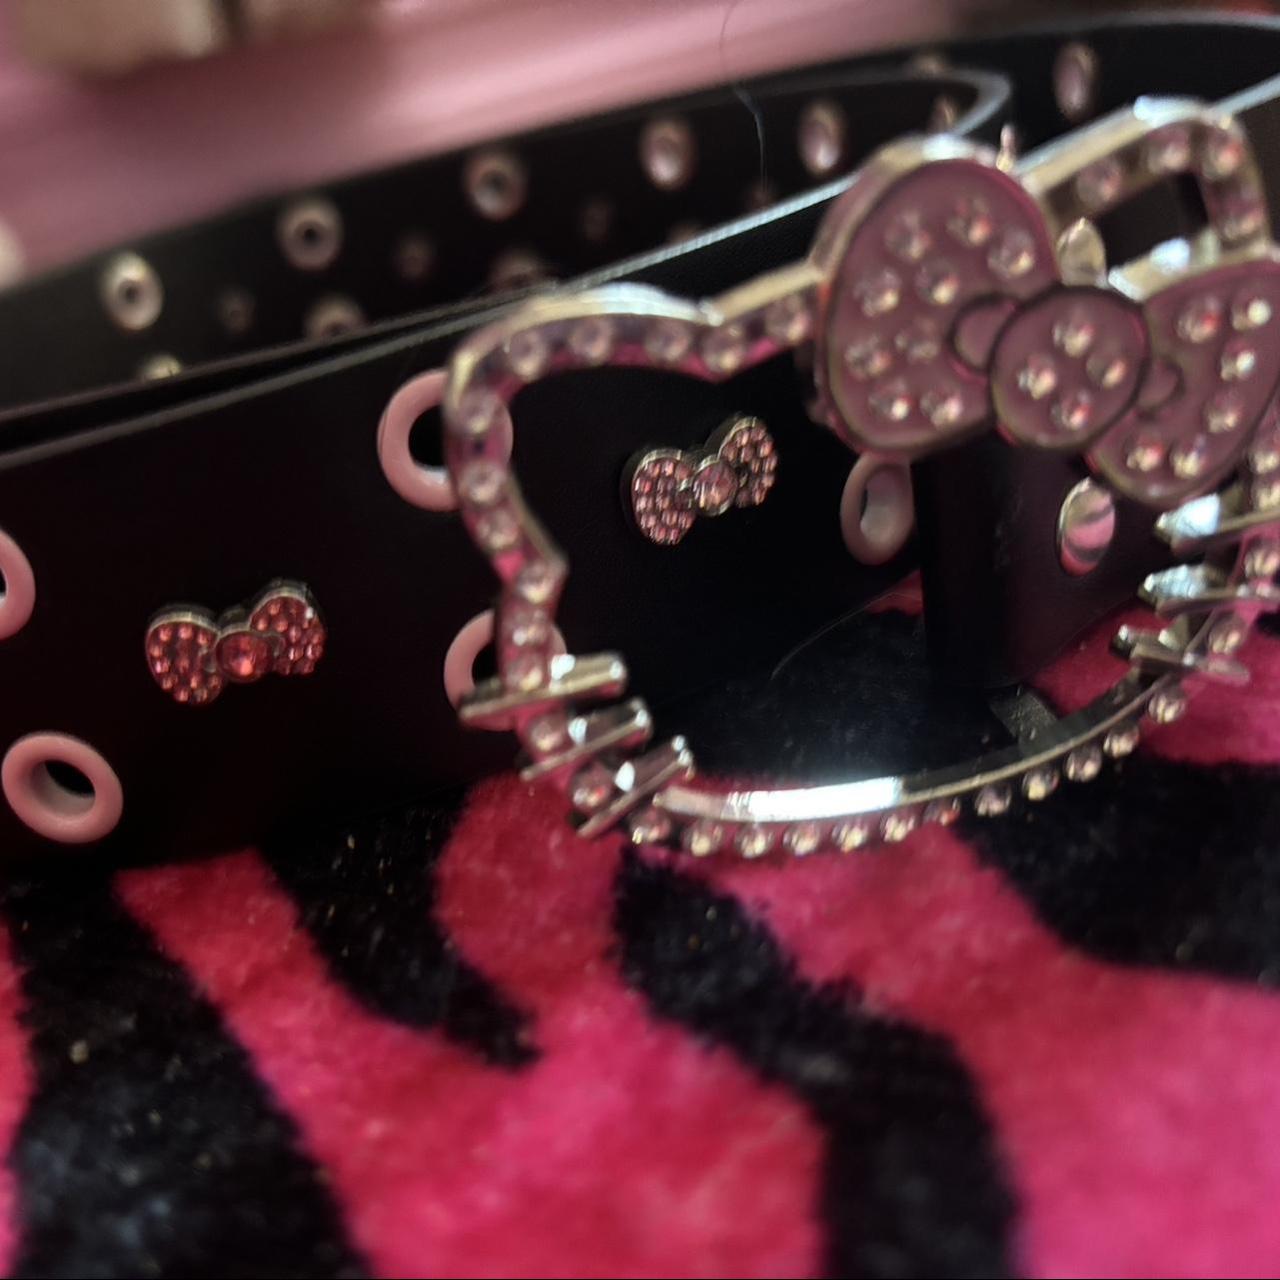 2007 Hello Kitty Sanrio Metallic Pink Monogram - Depop